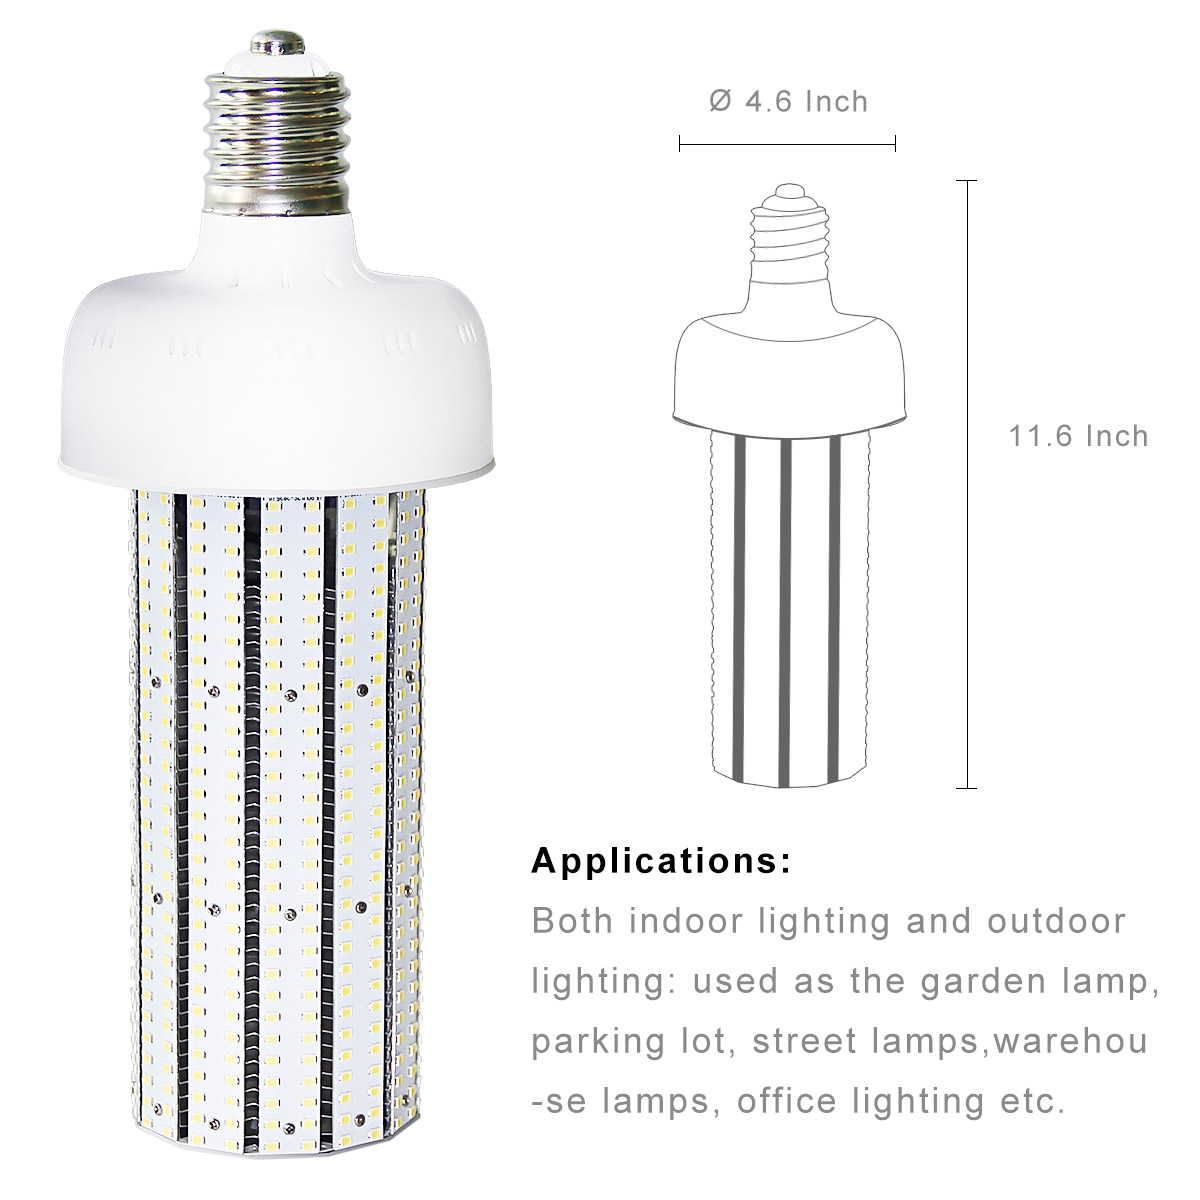 KAWELL 80W LED Corn Light Bulb E39 Large Mogul Base Street/Area Light, for Fixtures HID/HPS/Metal Halide or CFL, 9600 lumen 6500K Daylight 360°Flood Light, UL Listed, TUV-Qualified, DLC Certified 